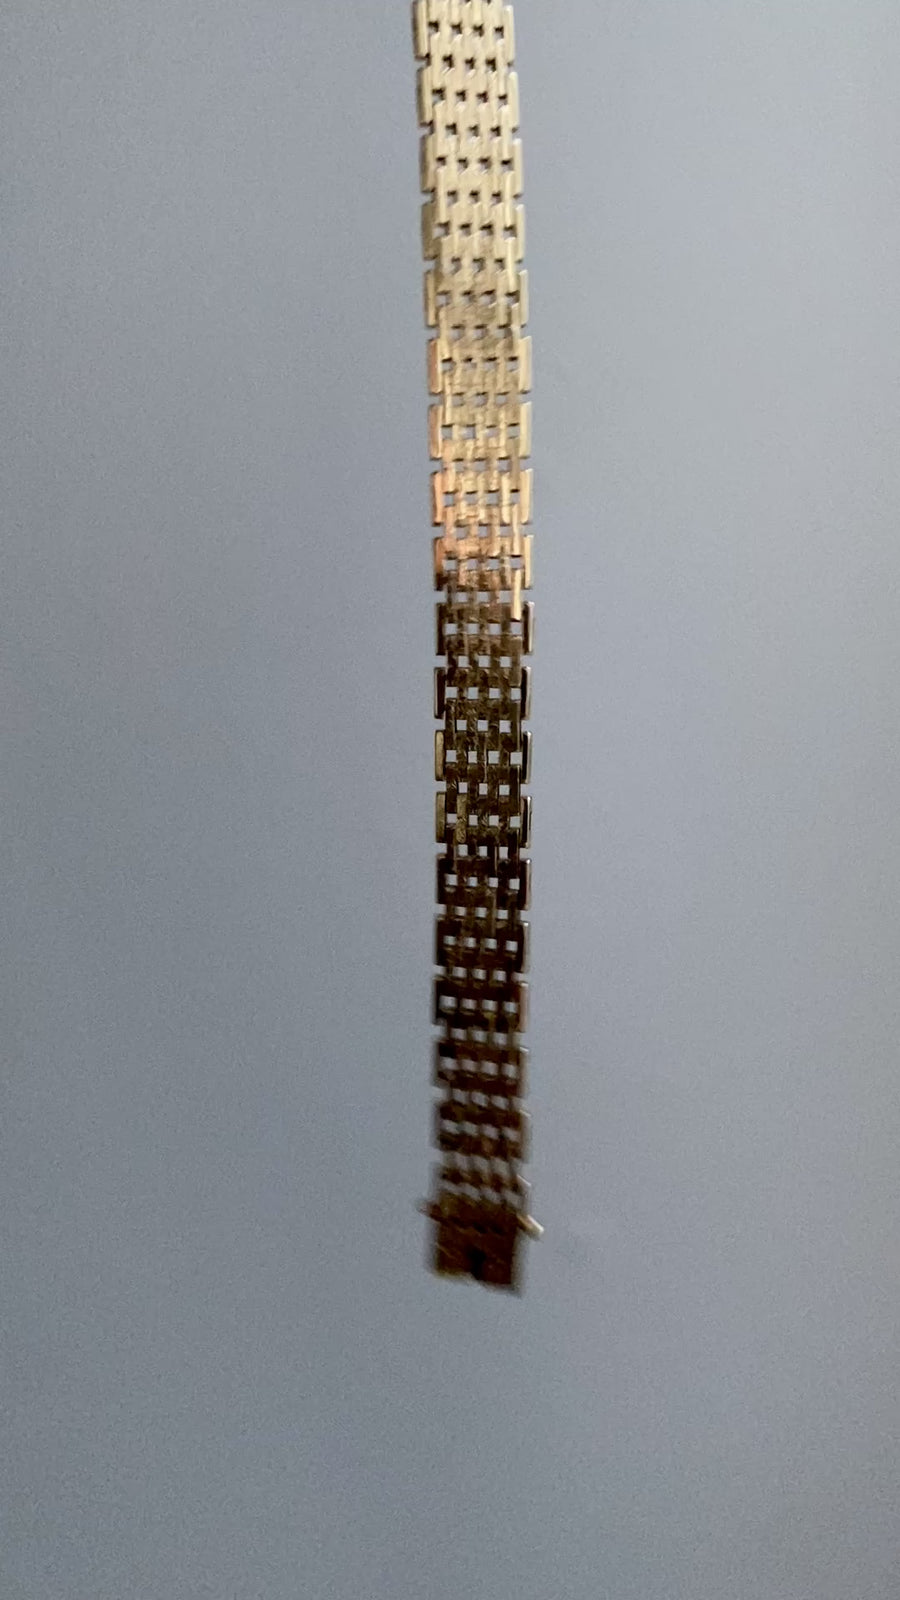 14k gold Danish brick link bracelet - satin and reversible - 7.75 inch length